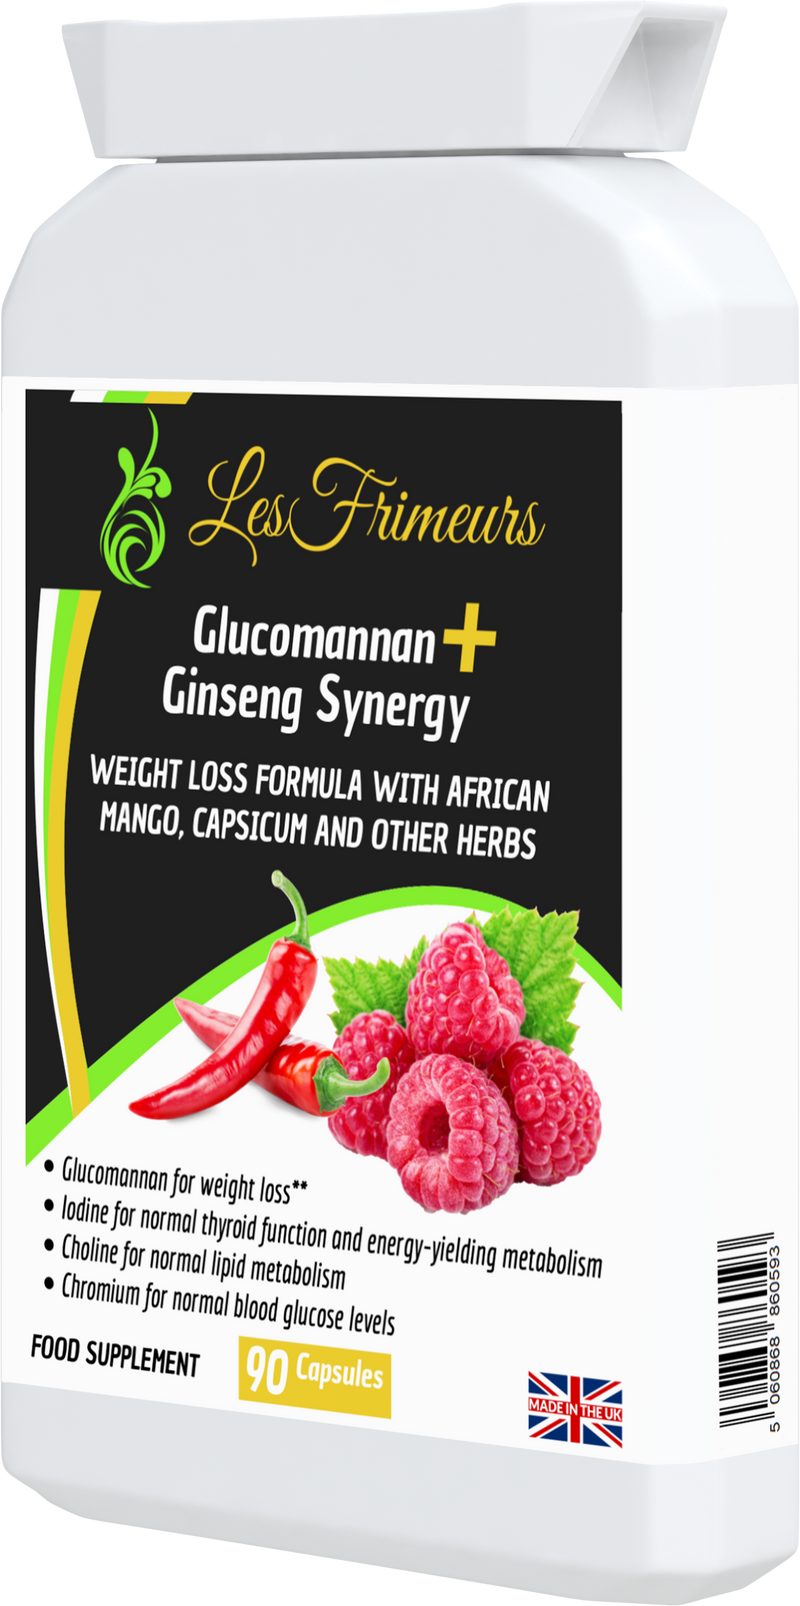 Glucomannan + Ginseng Synergy